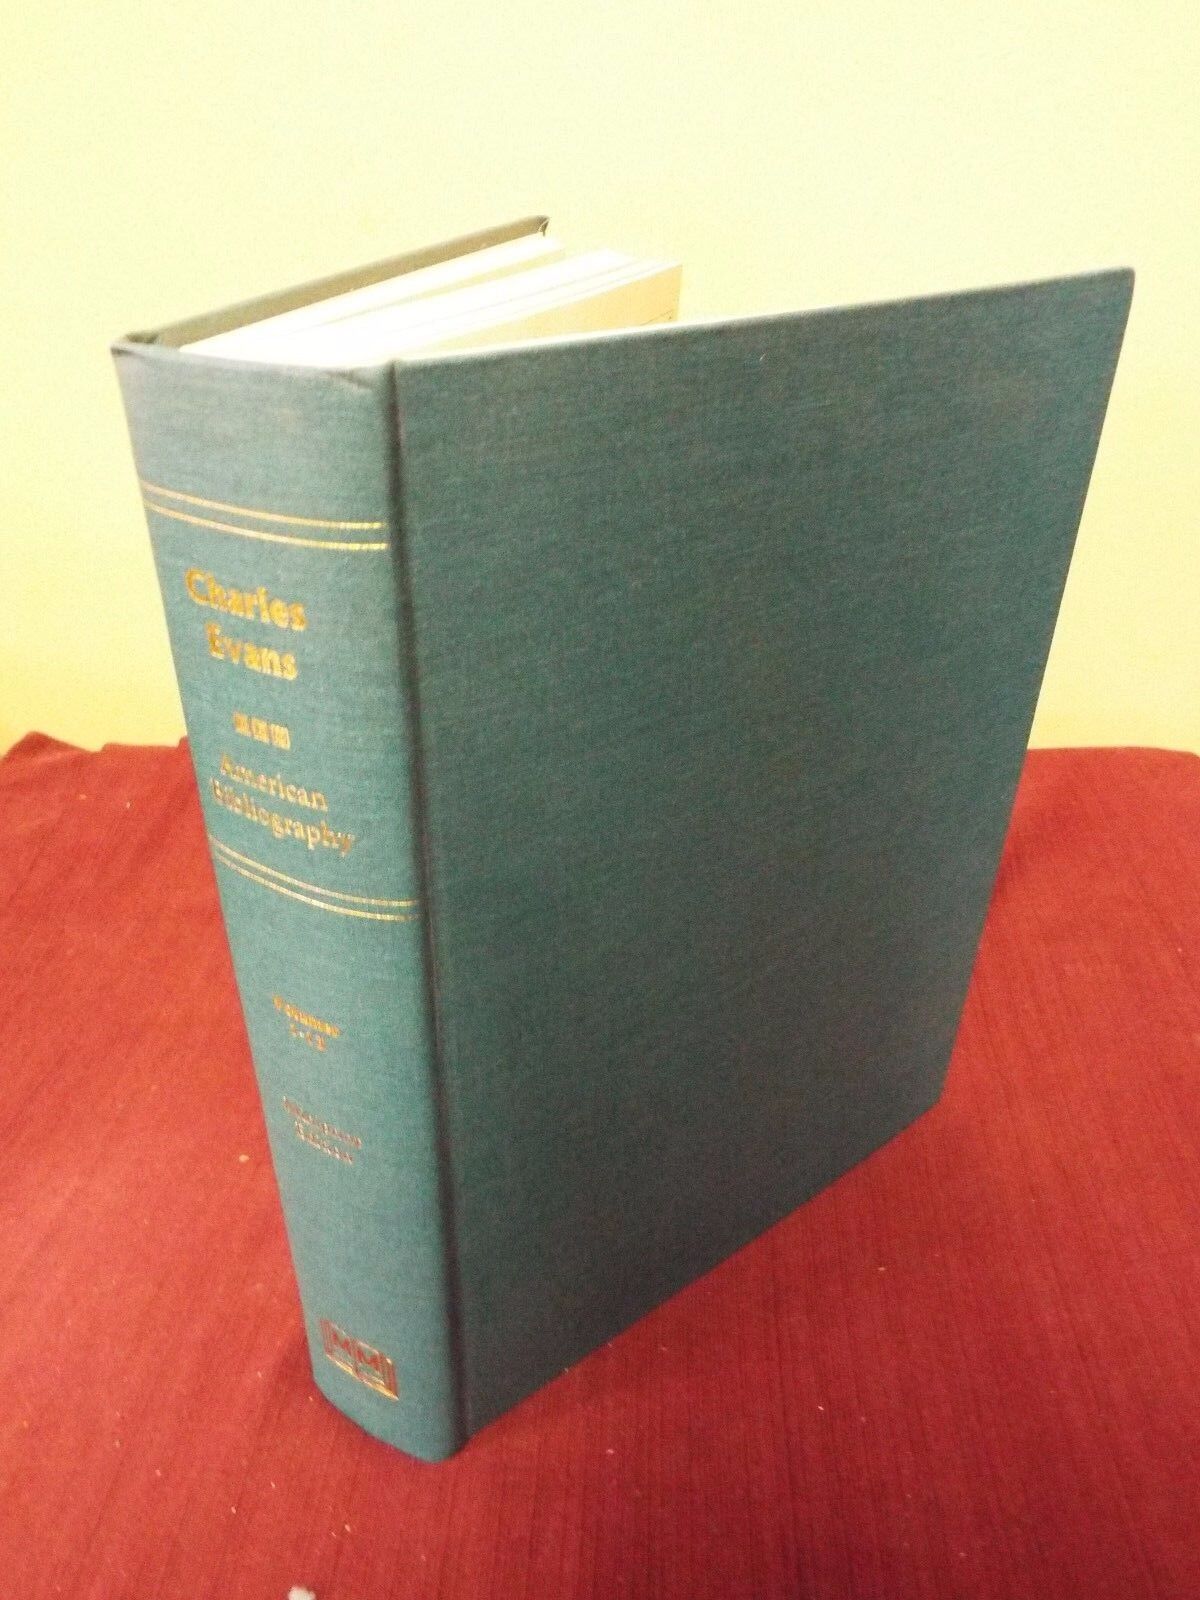 Charles Evans - American Bibliography Volumes 1-13 Miniprint Edition